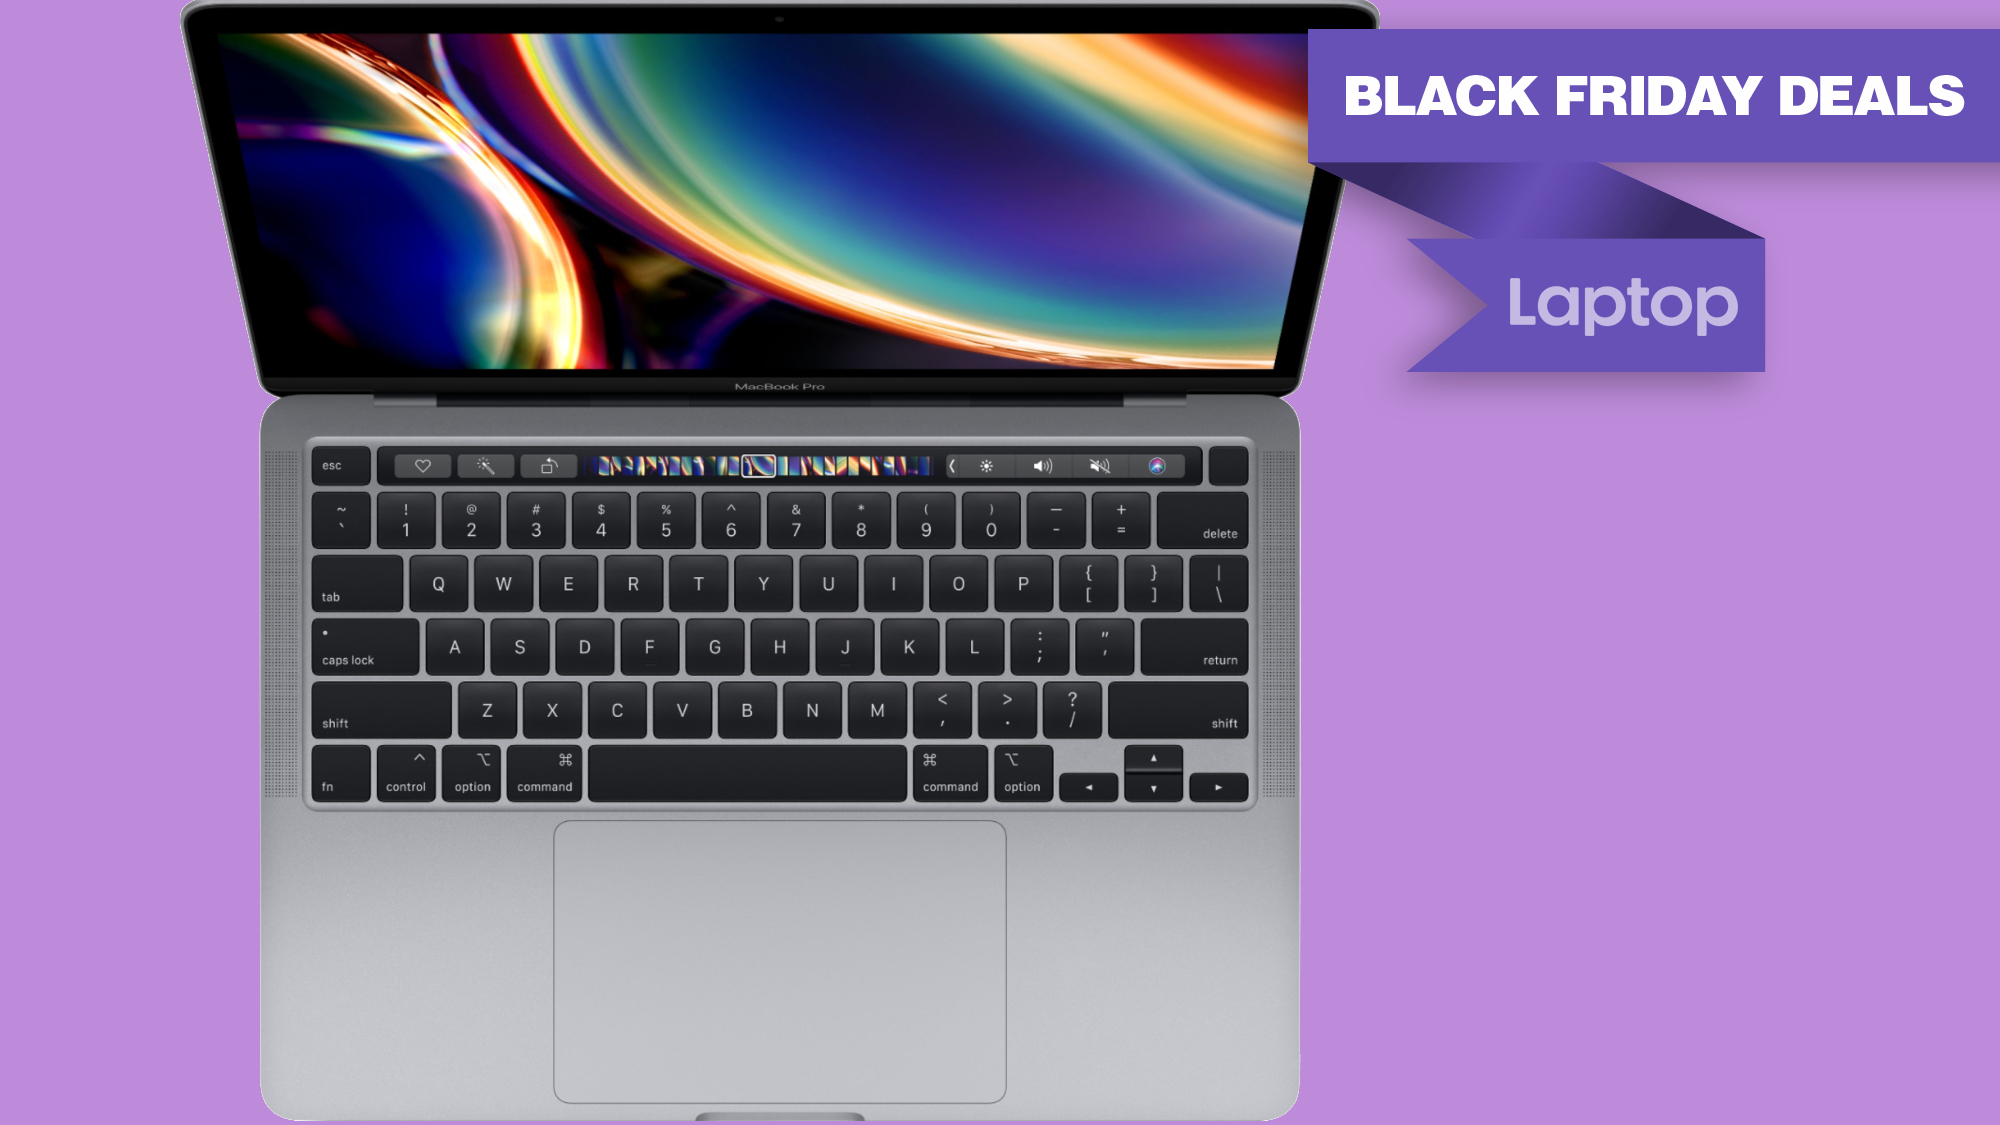 Best MacBook Black Friday deal! This 13inch MacBook Pro slashes 150